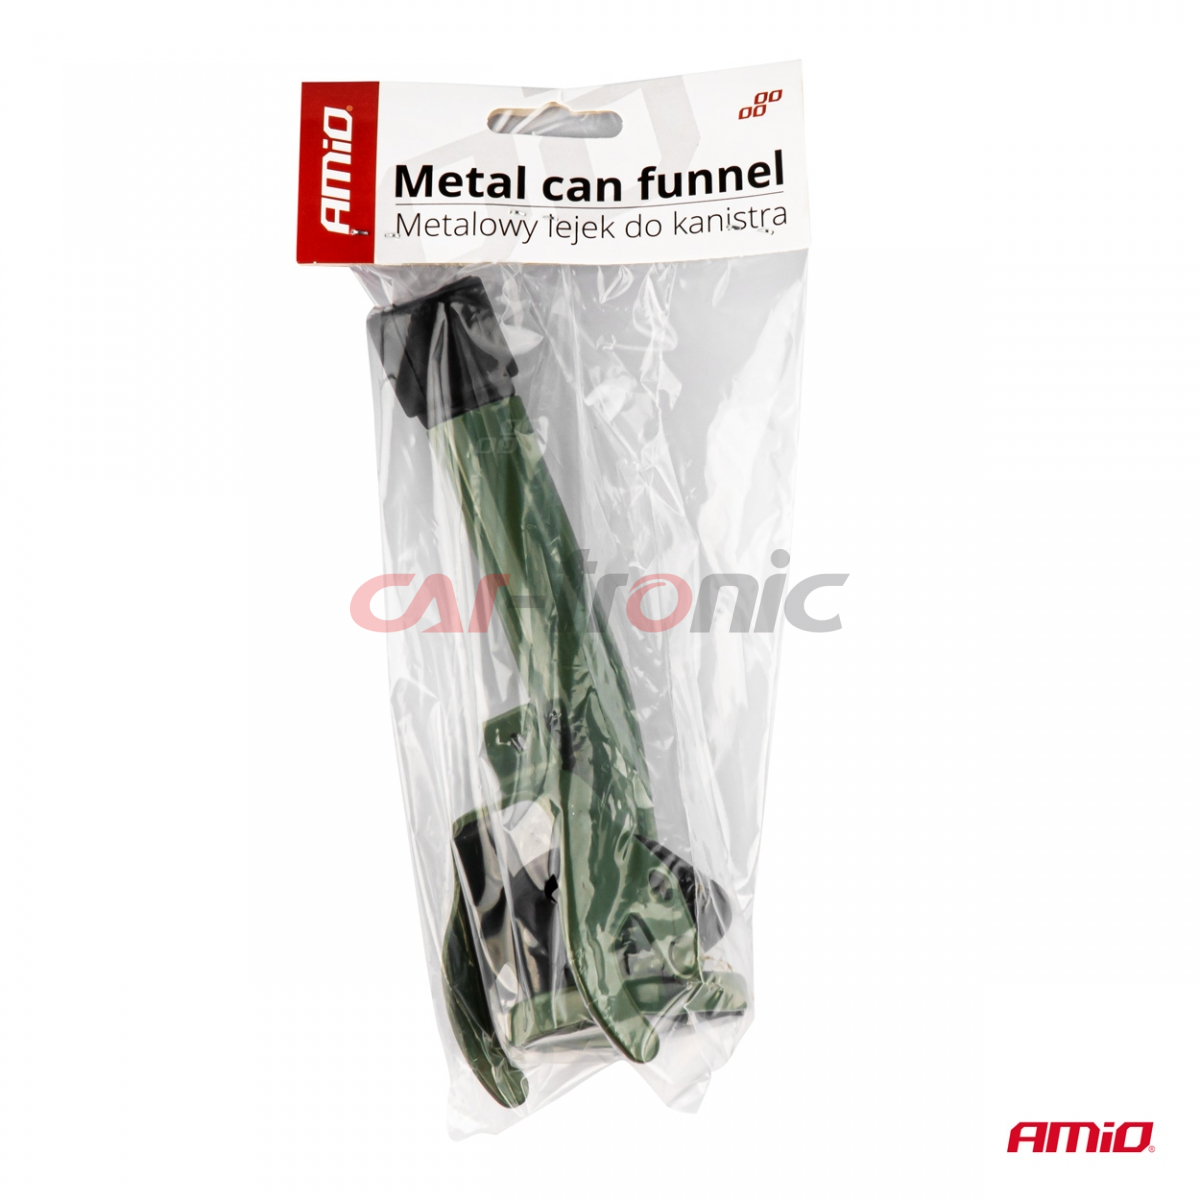 Metalowy lejek do kanistra AMIO-02657